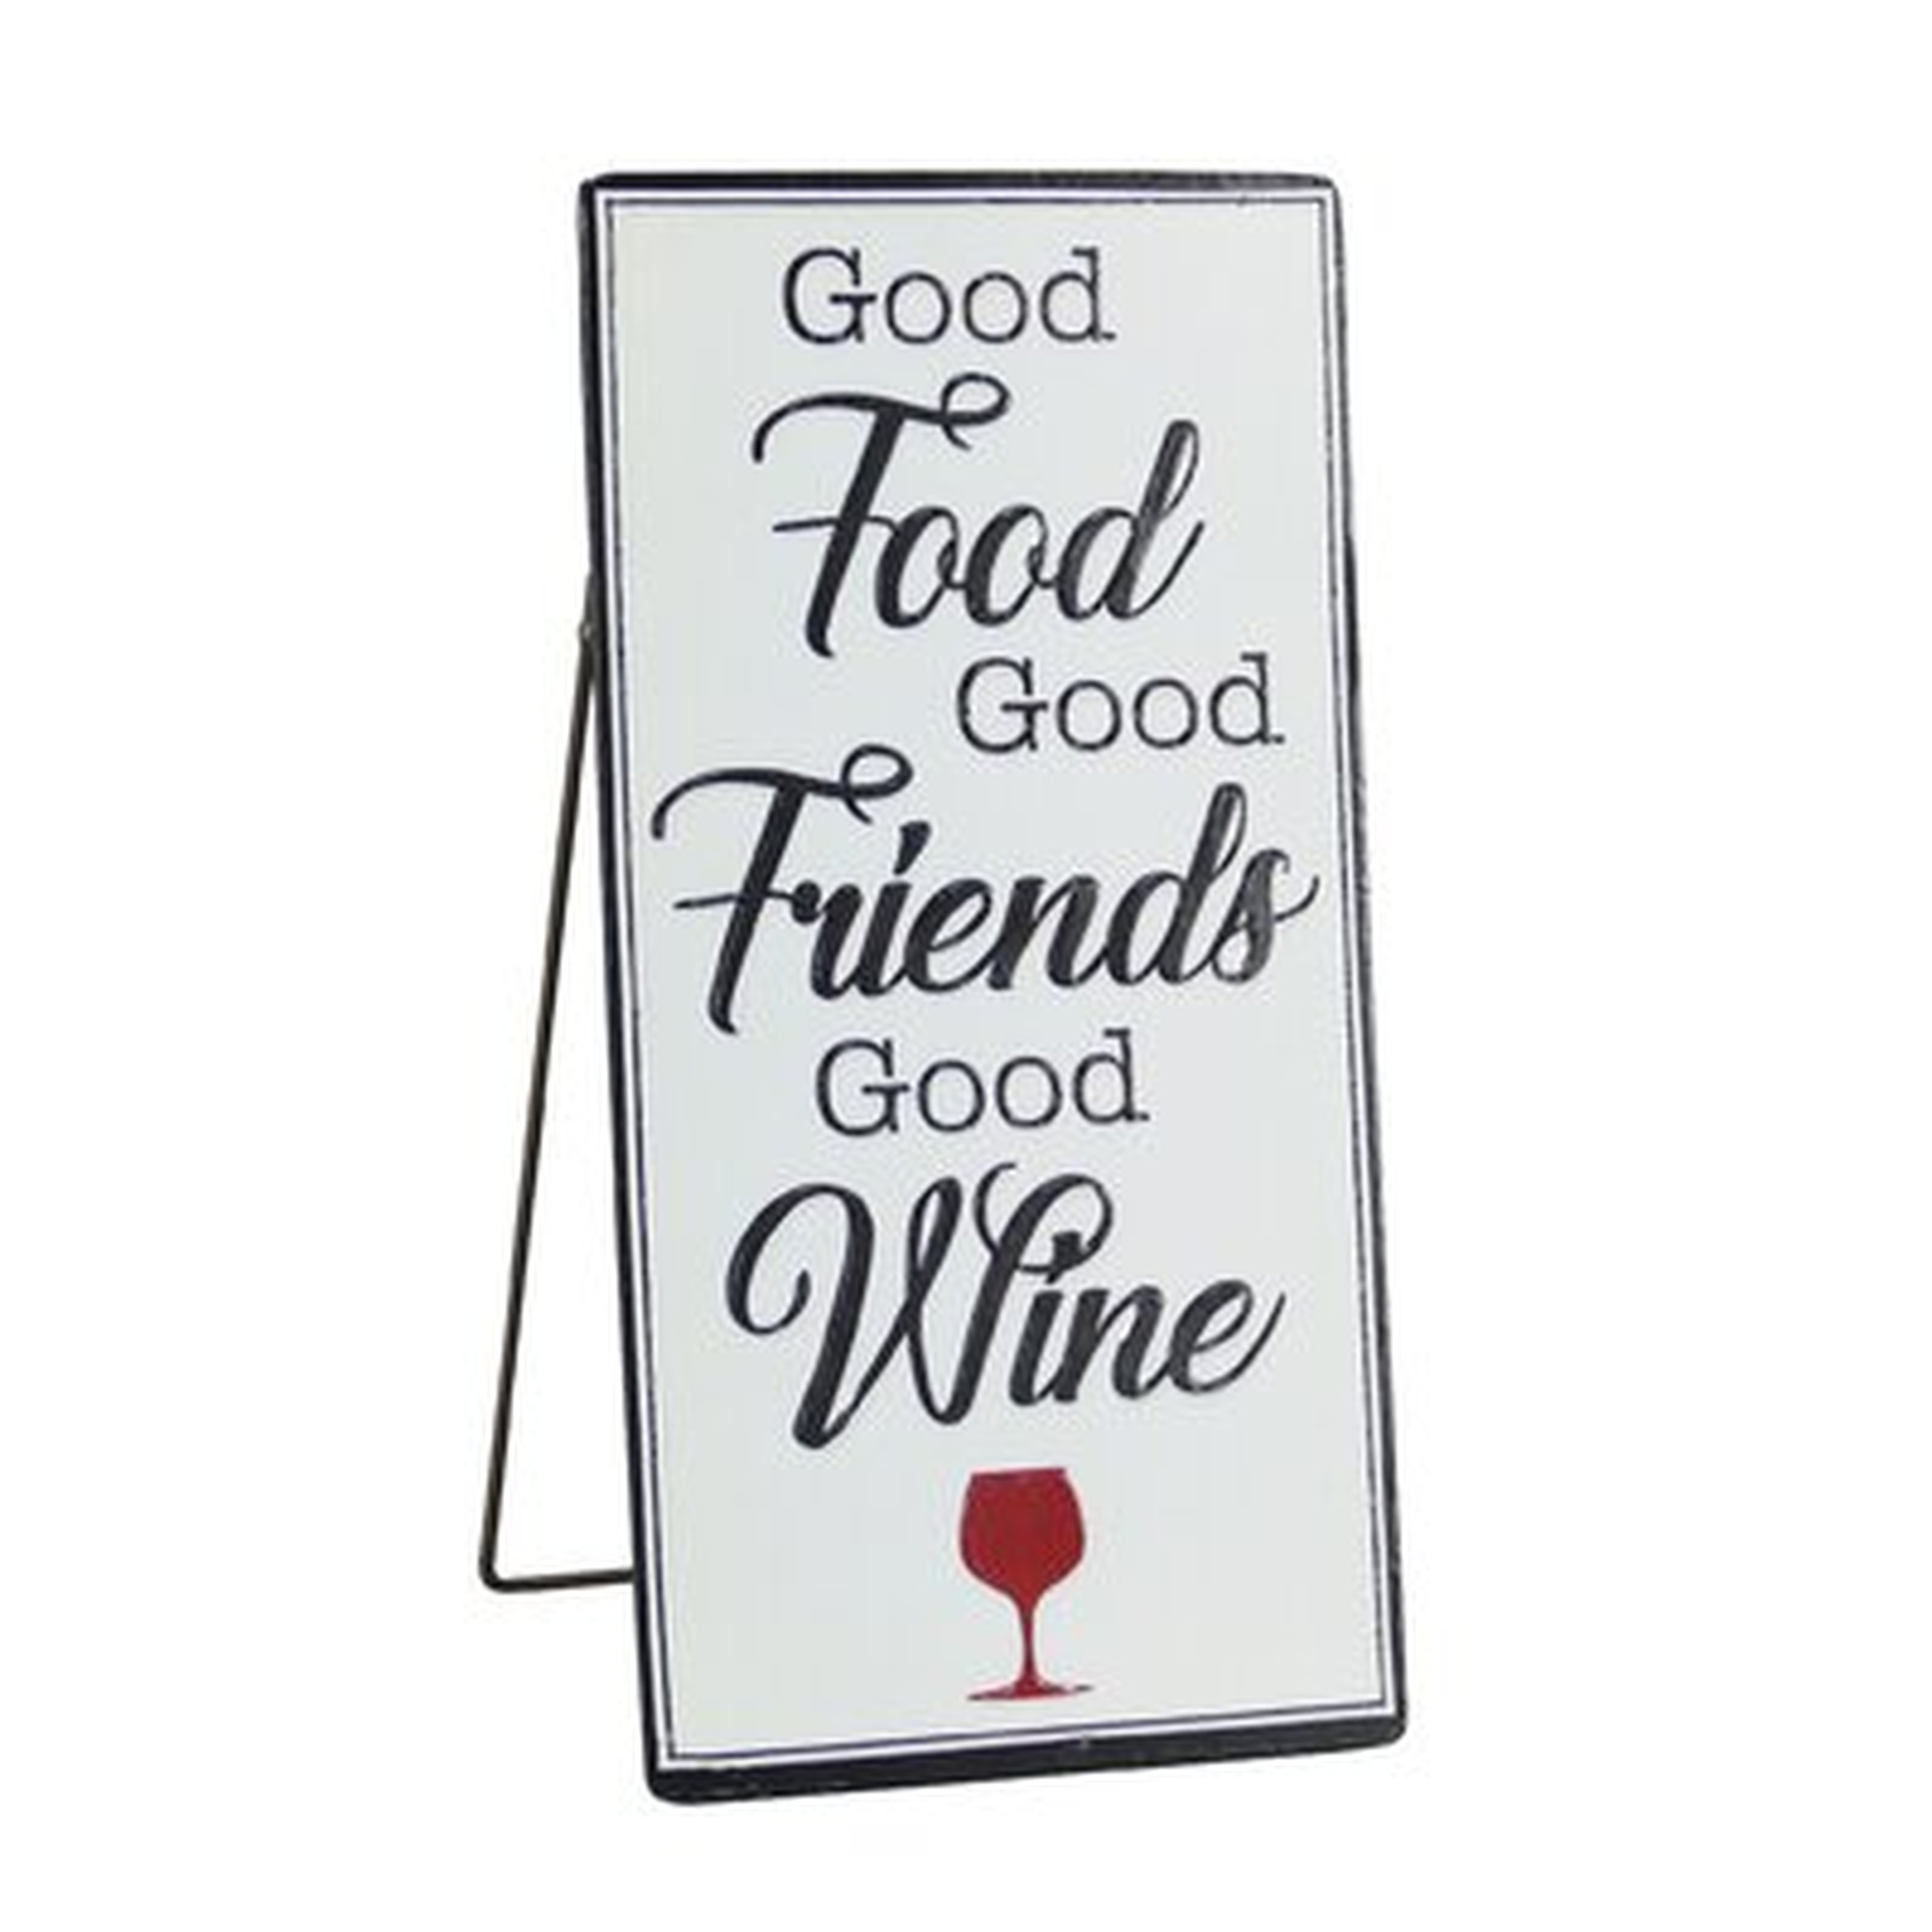 Damiáno Good Food Good Friends Good Wine Free Standing Metal Sign - Wayfair